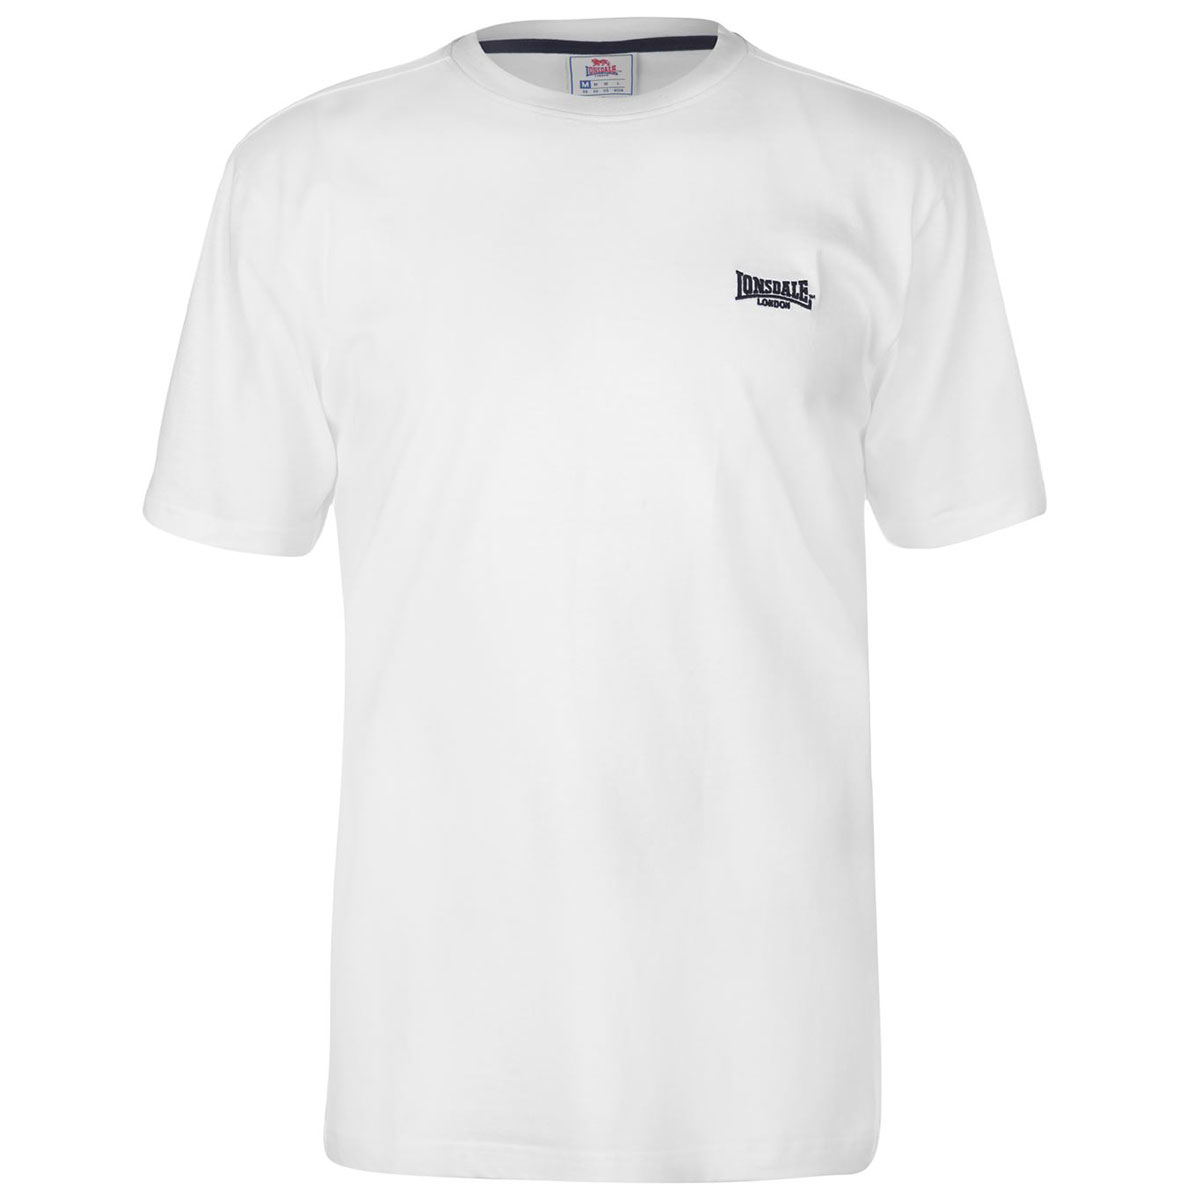 Lonsdale Men's Plain Short-Sleeve Tee - White, XL